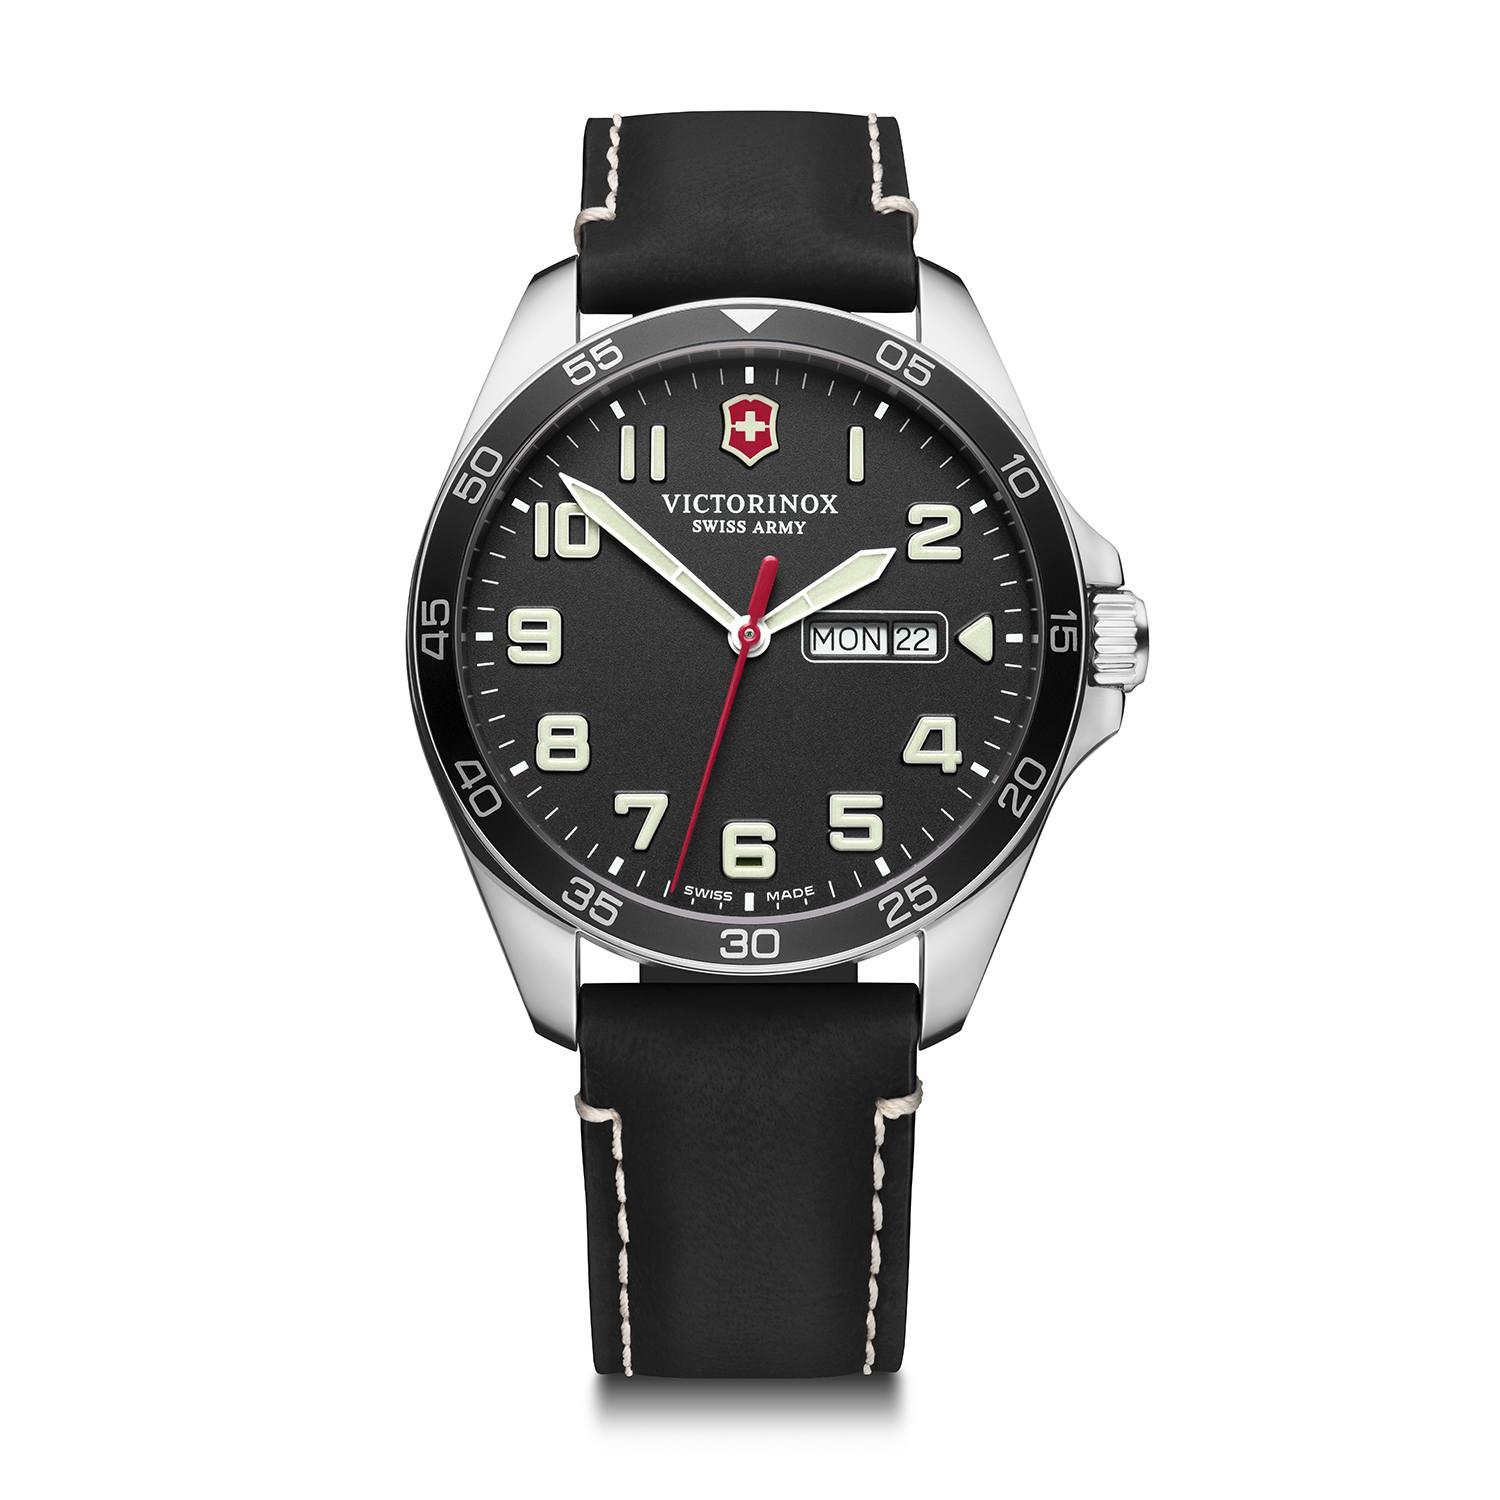 Victorinox Swiss Army Fieldforce Timepiece